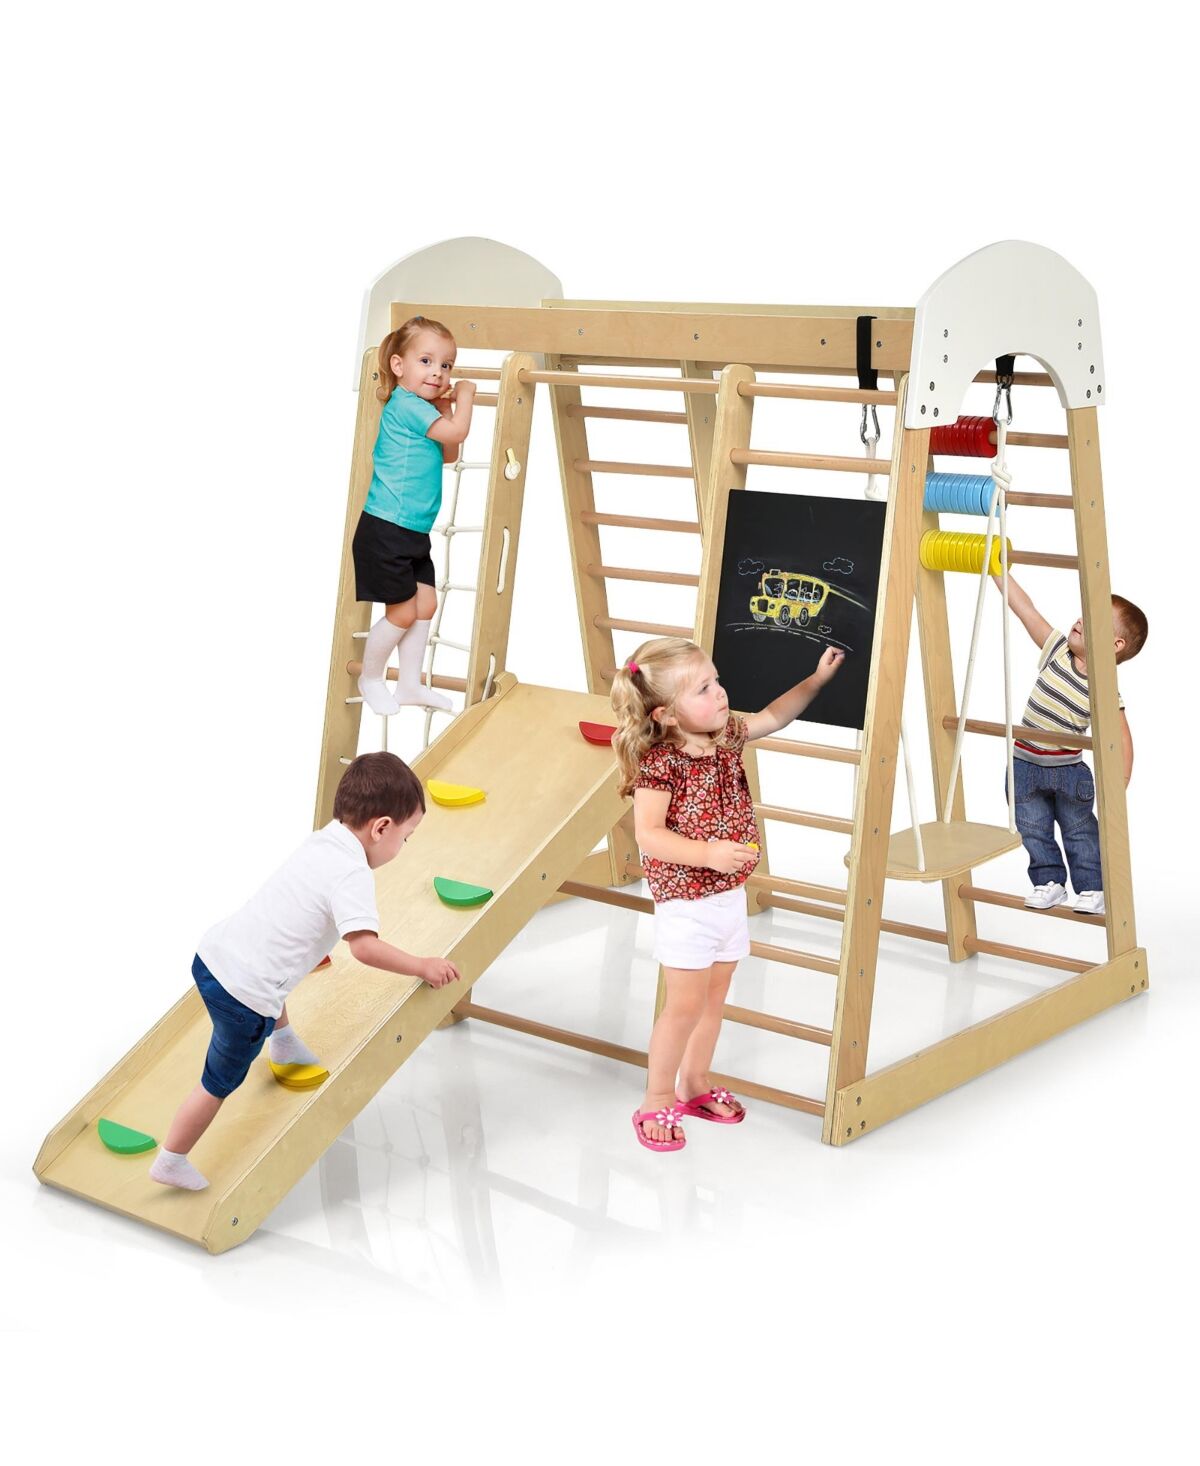 Costway Indoor Playground Climbing Gym Kids Wooden 8 in 1 Climber Playset for Children - Yellow